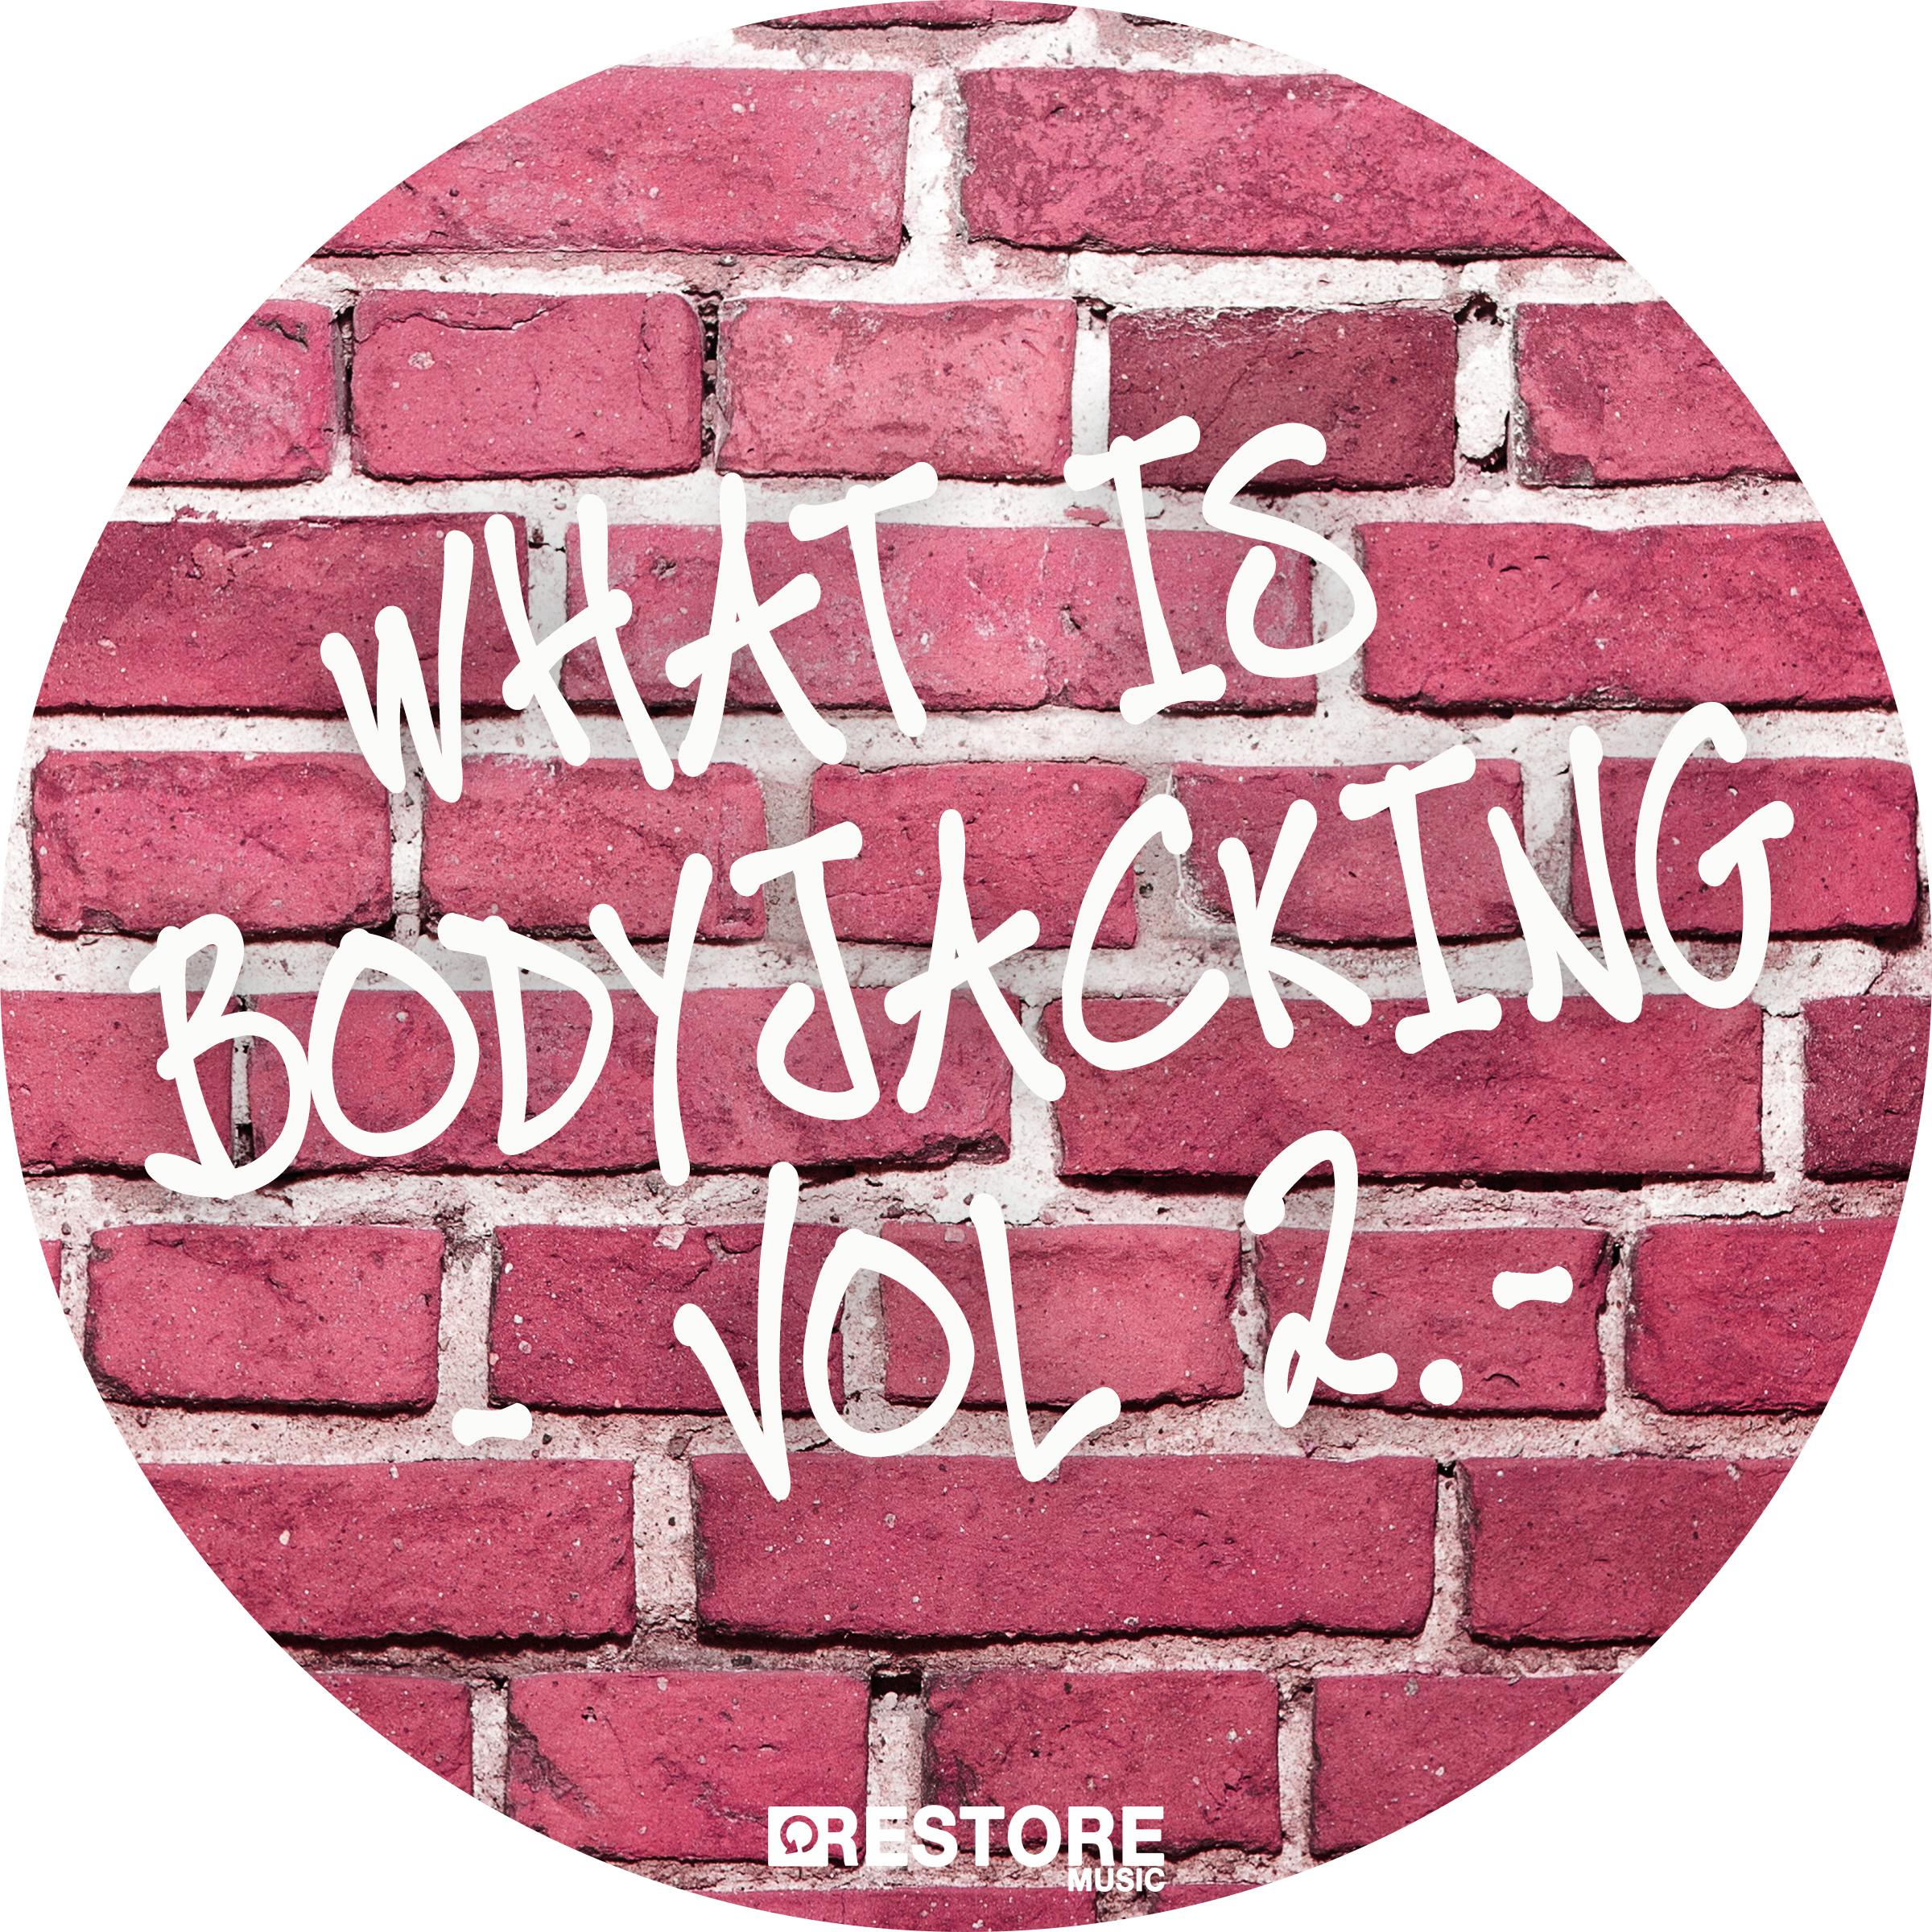 What Is Bodyjacking, Vol. 2